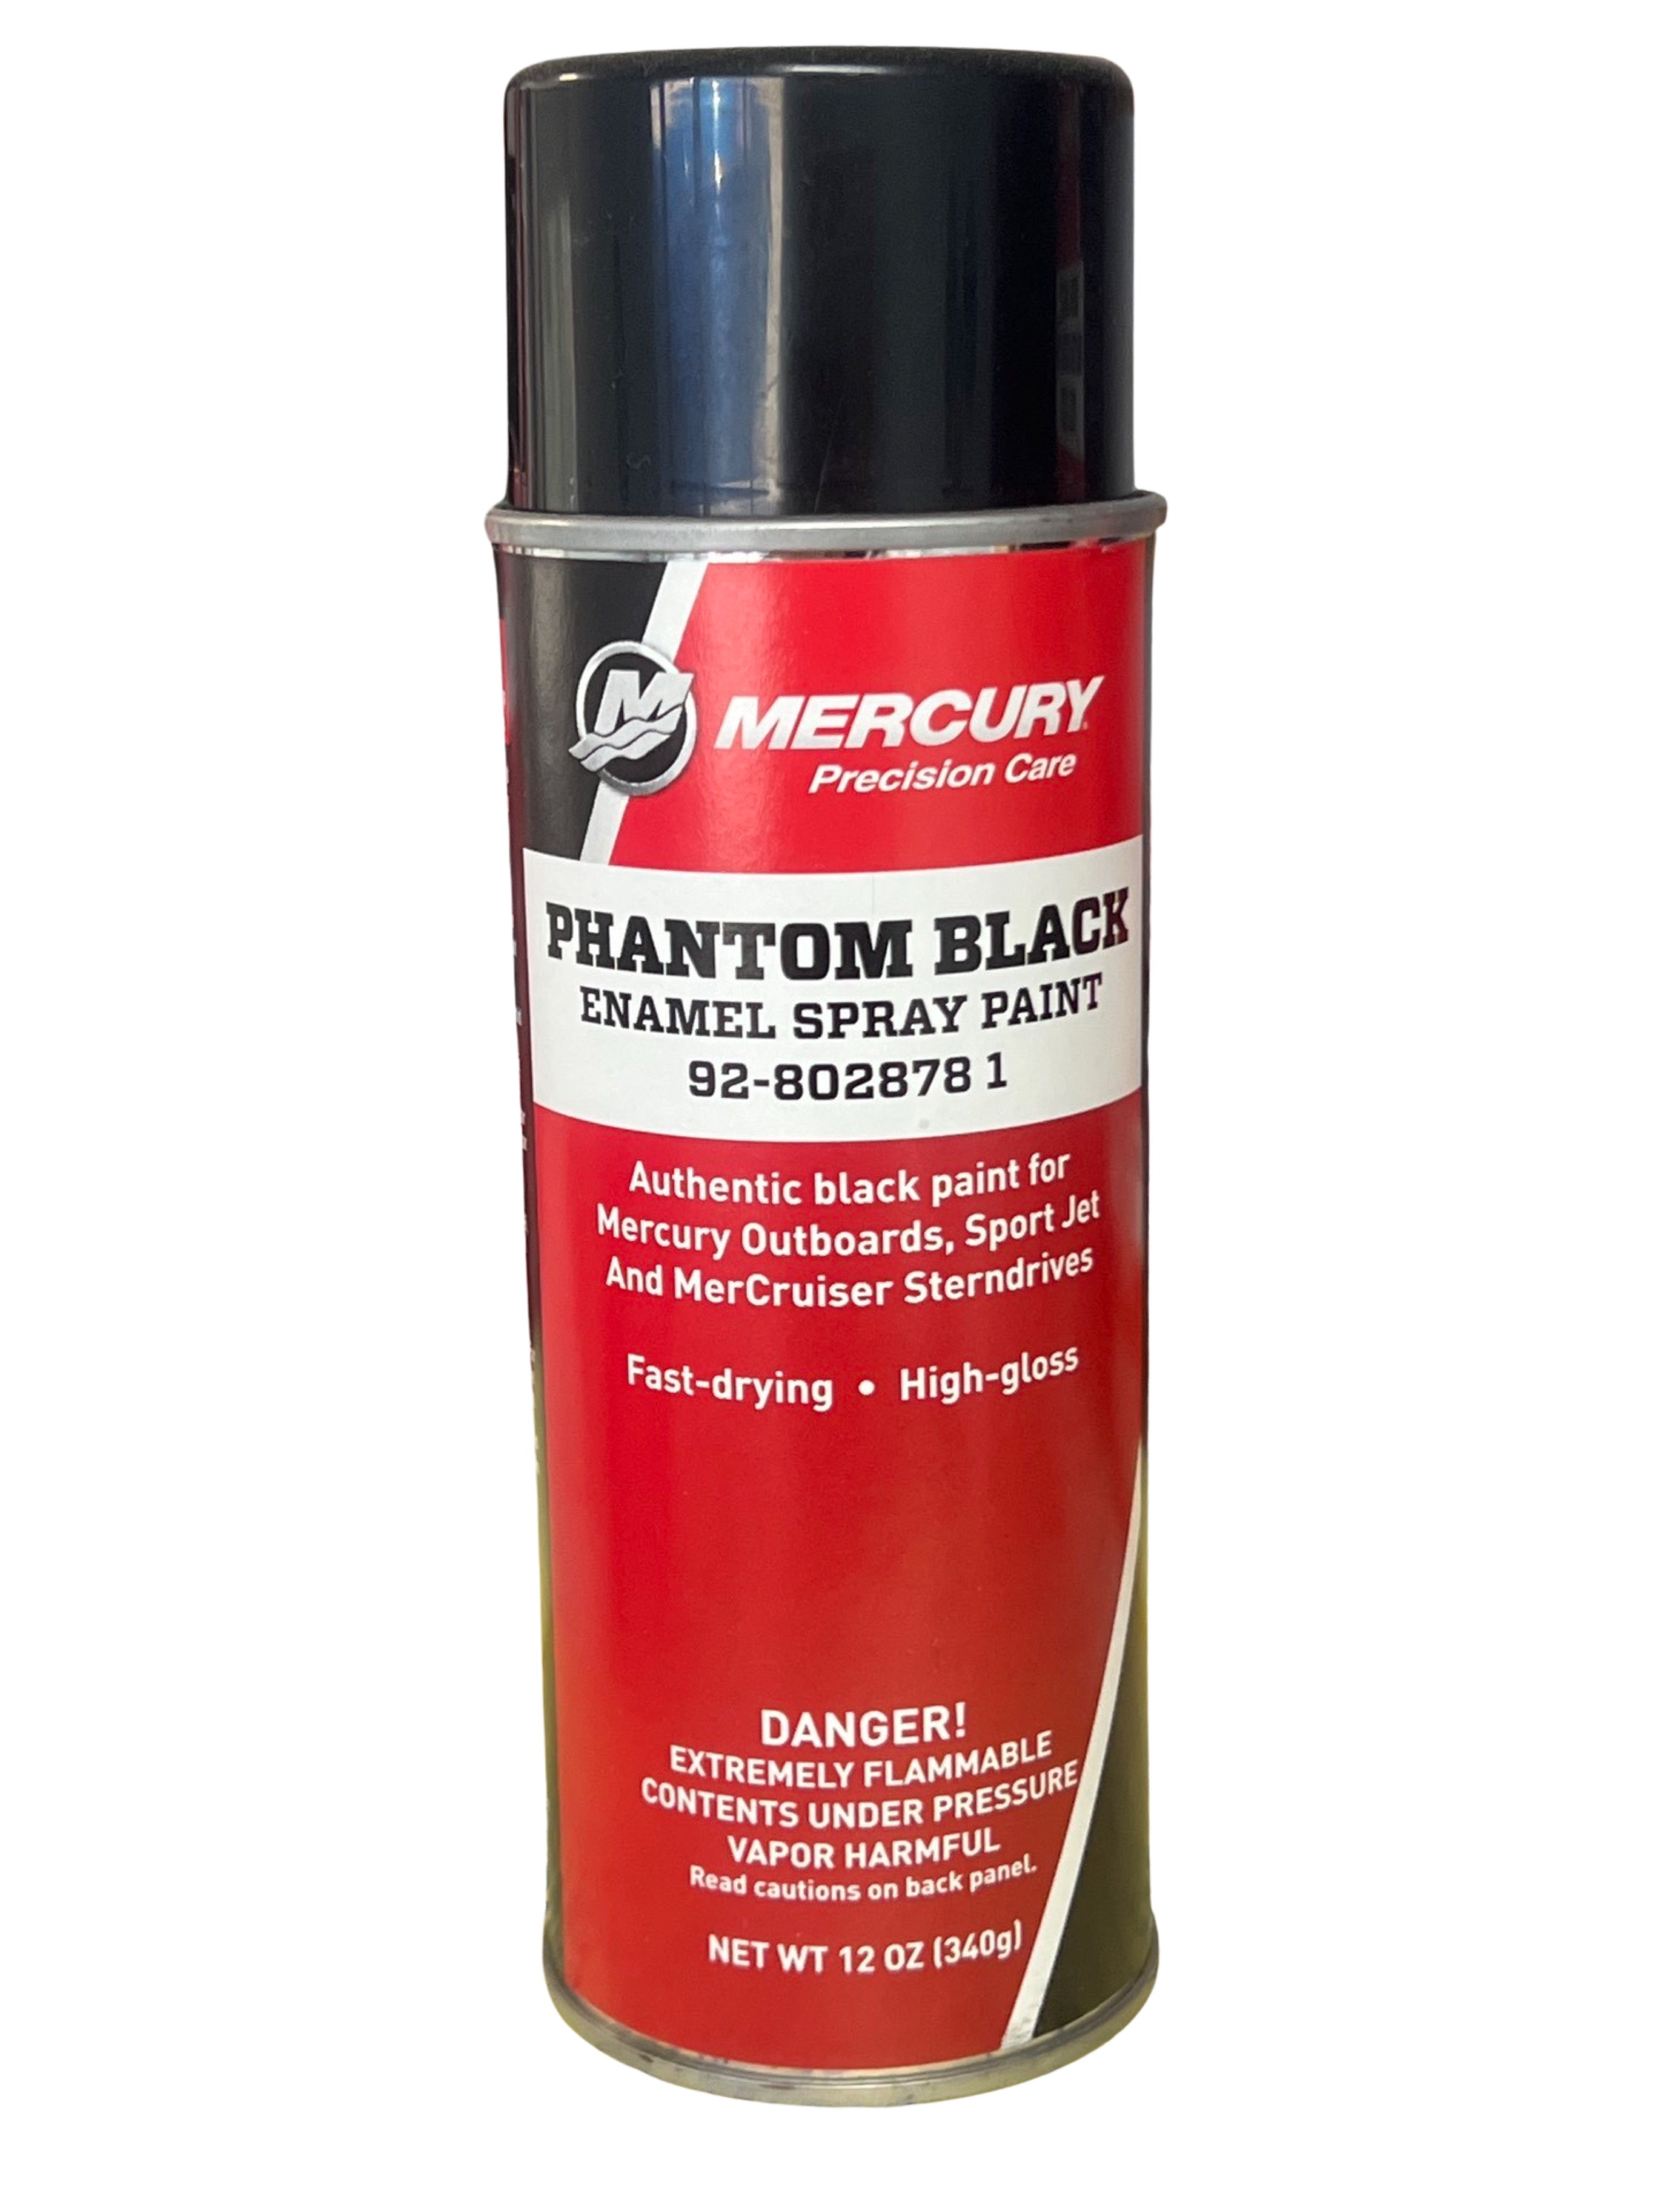 Phantom Black Enamel Spray Paint P/N: 92-8028781